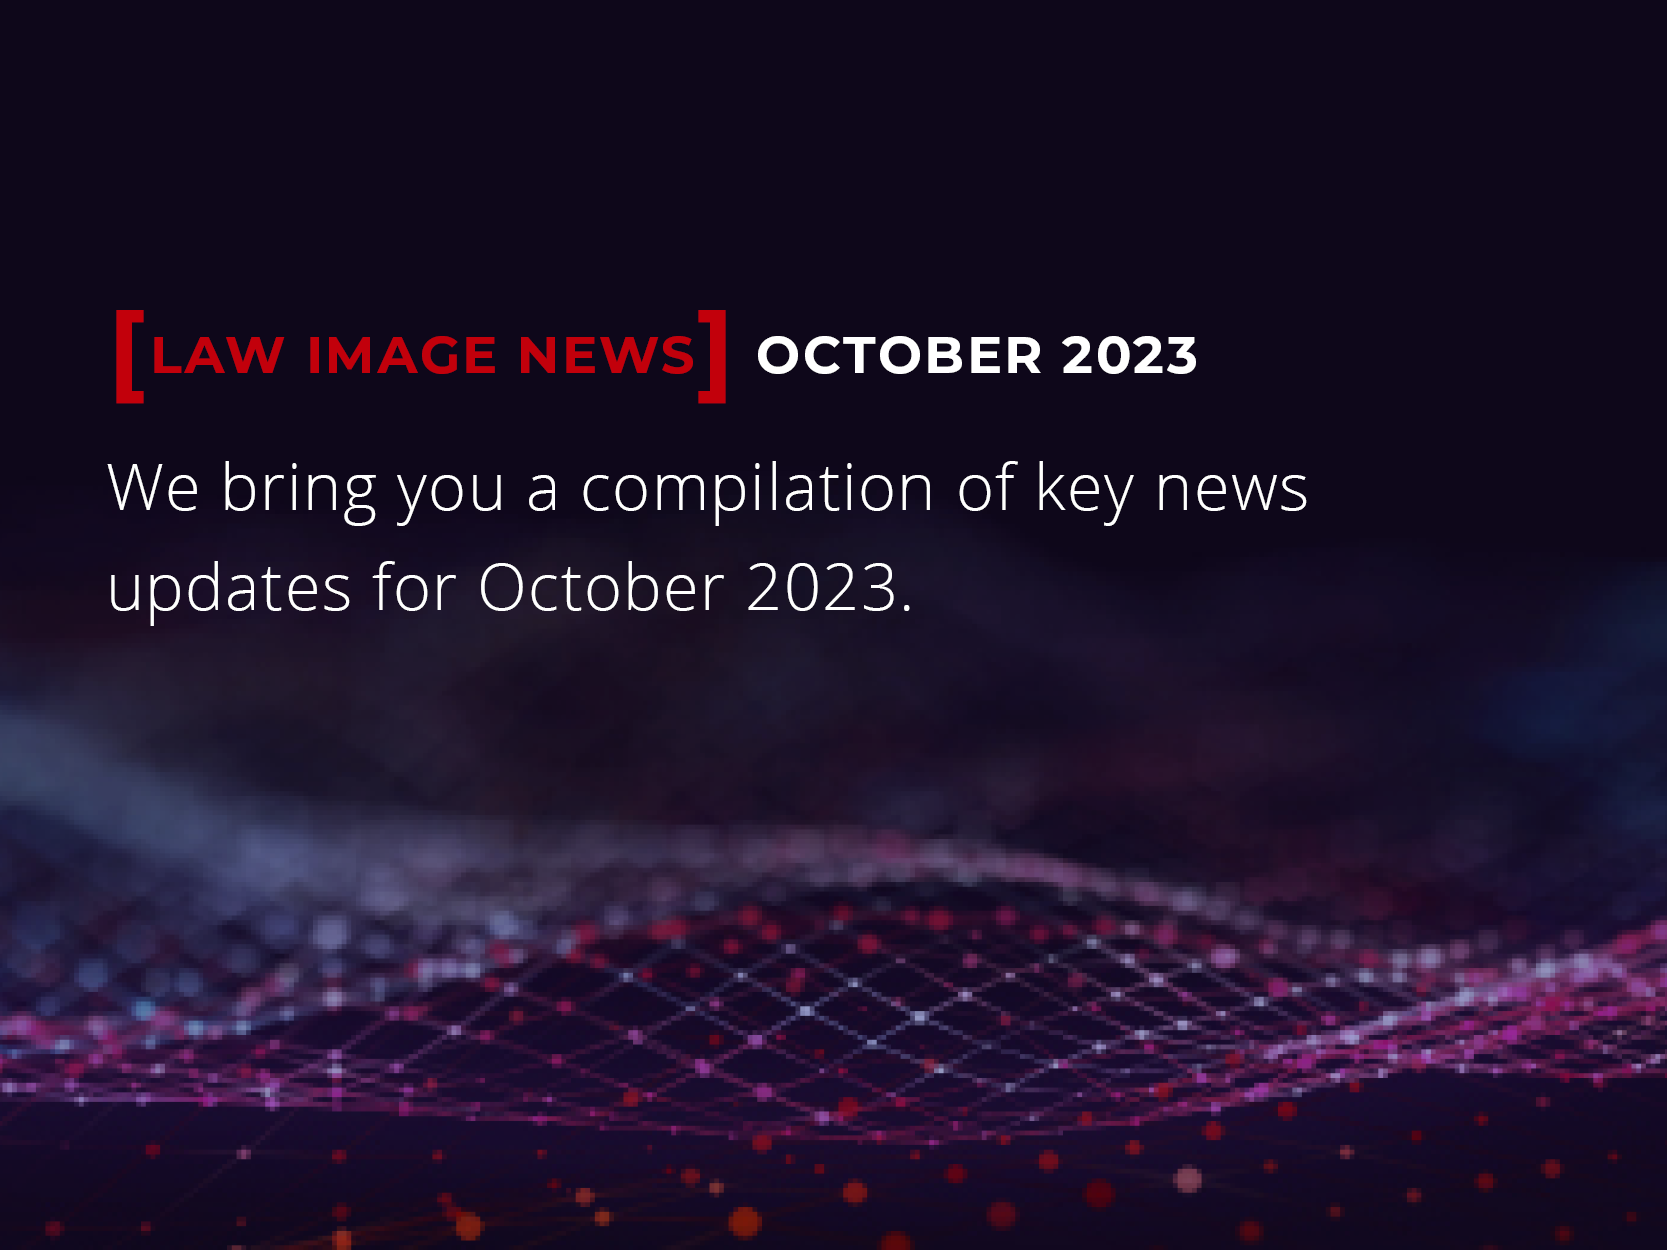 October 2023 News Key Updates